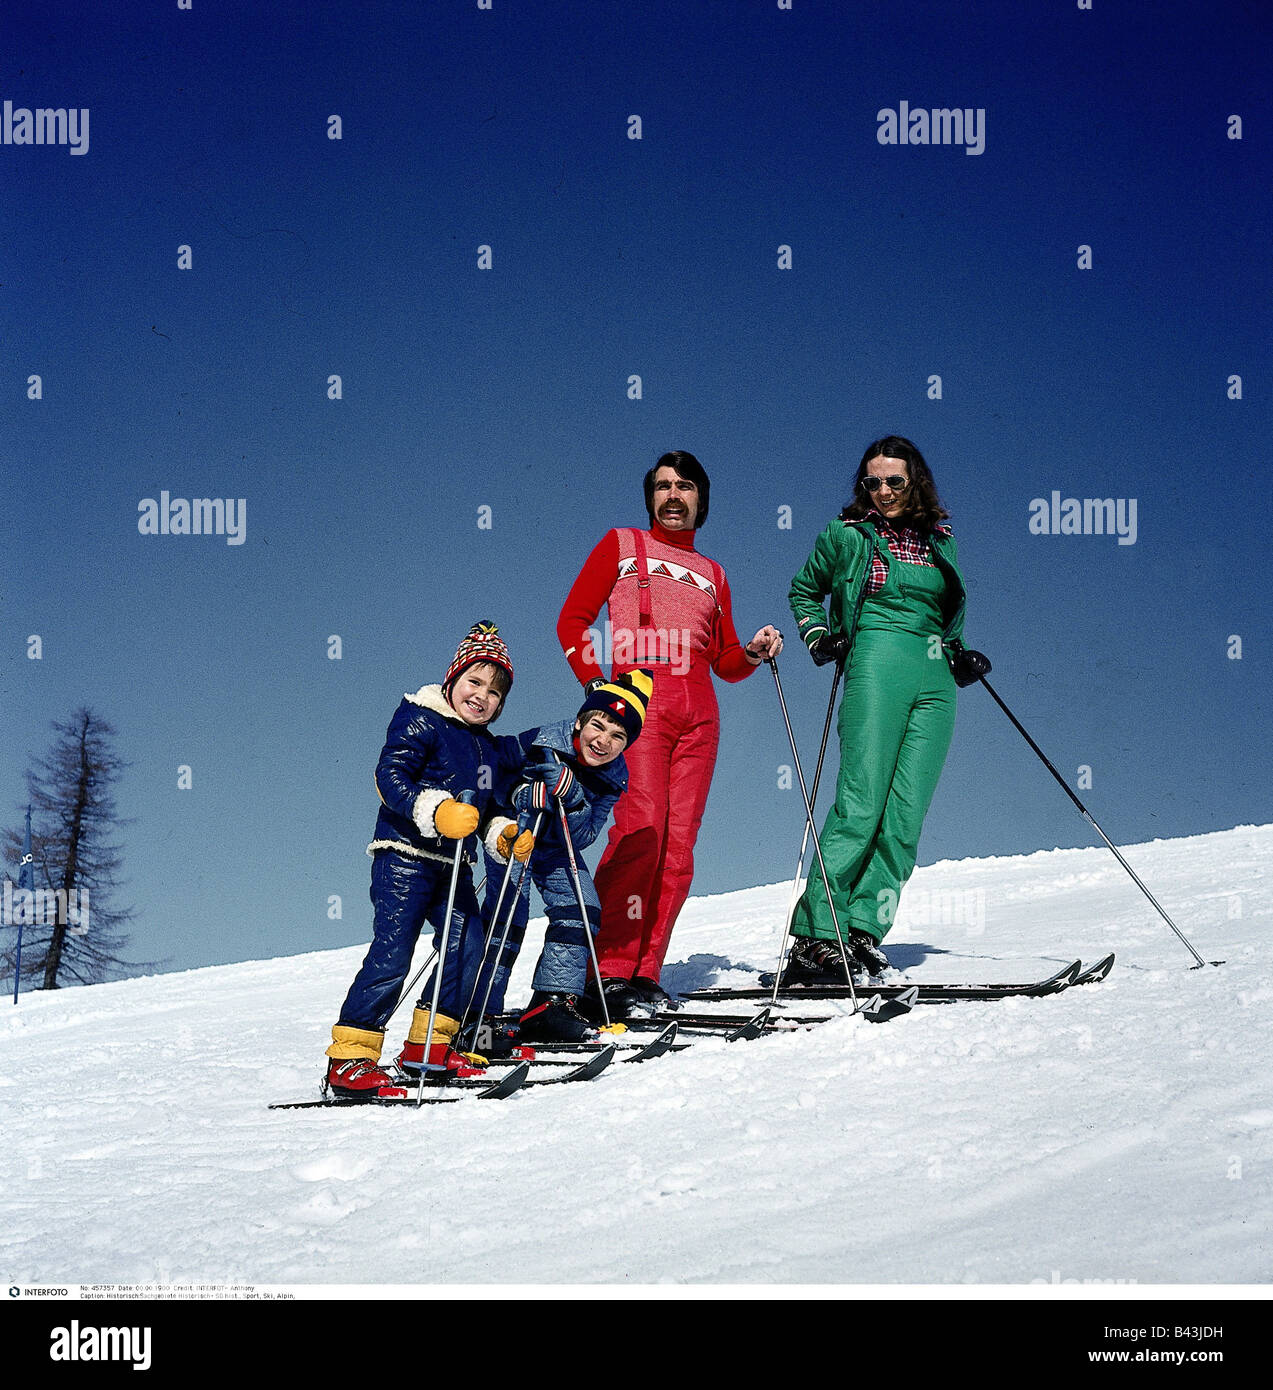 Awesome 80's Turtleneck in retro fashion with Ski Colorado print